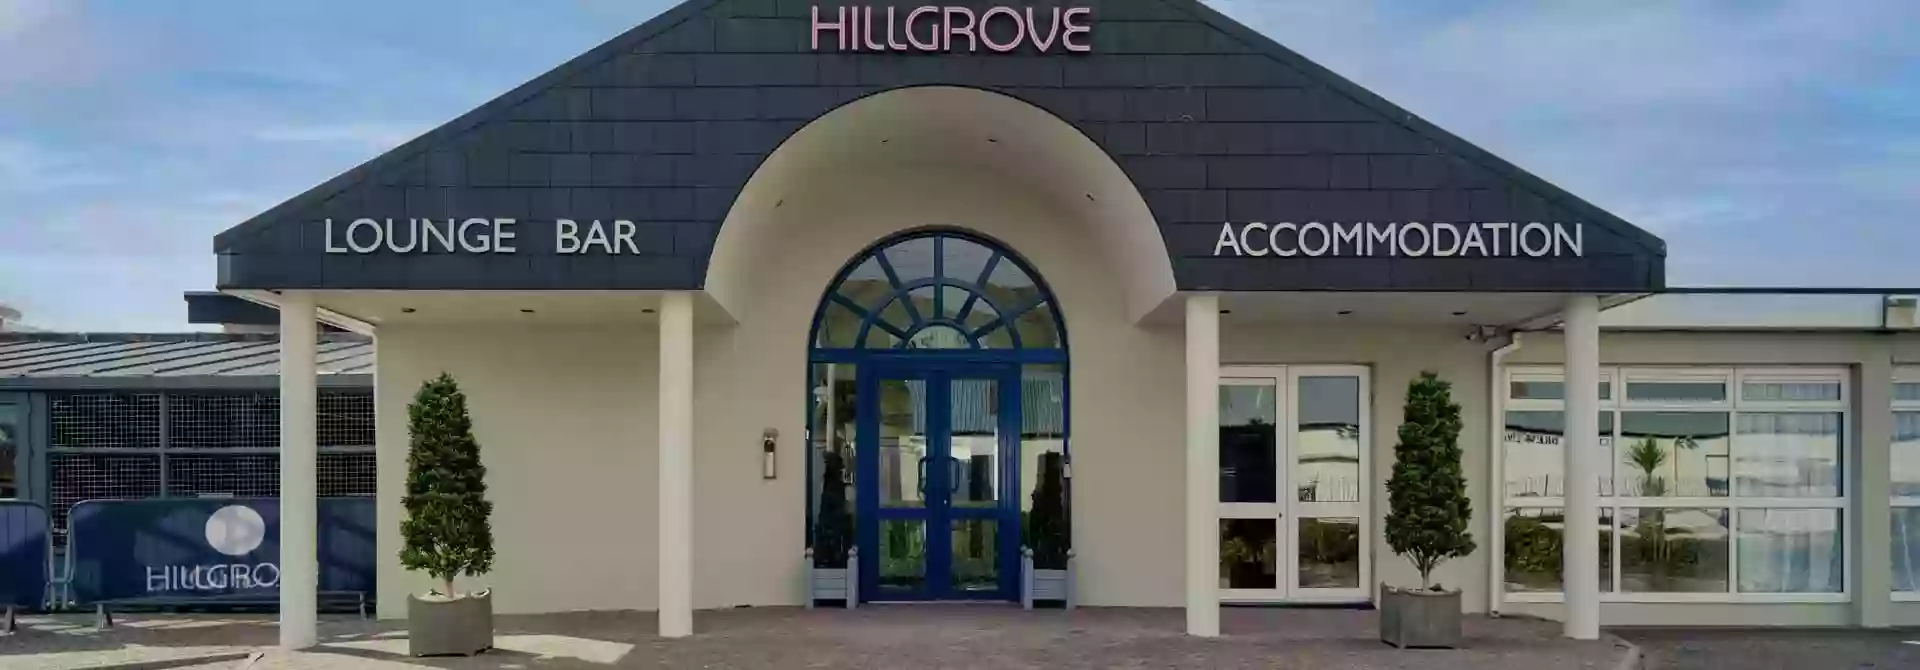 Hillgrove Accommodation